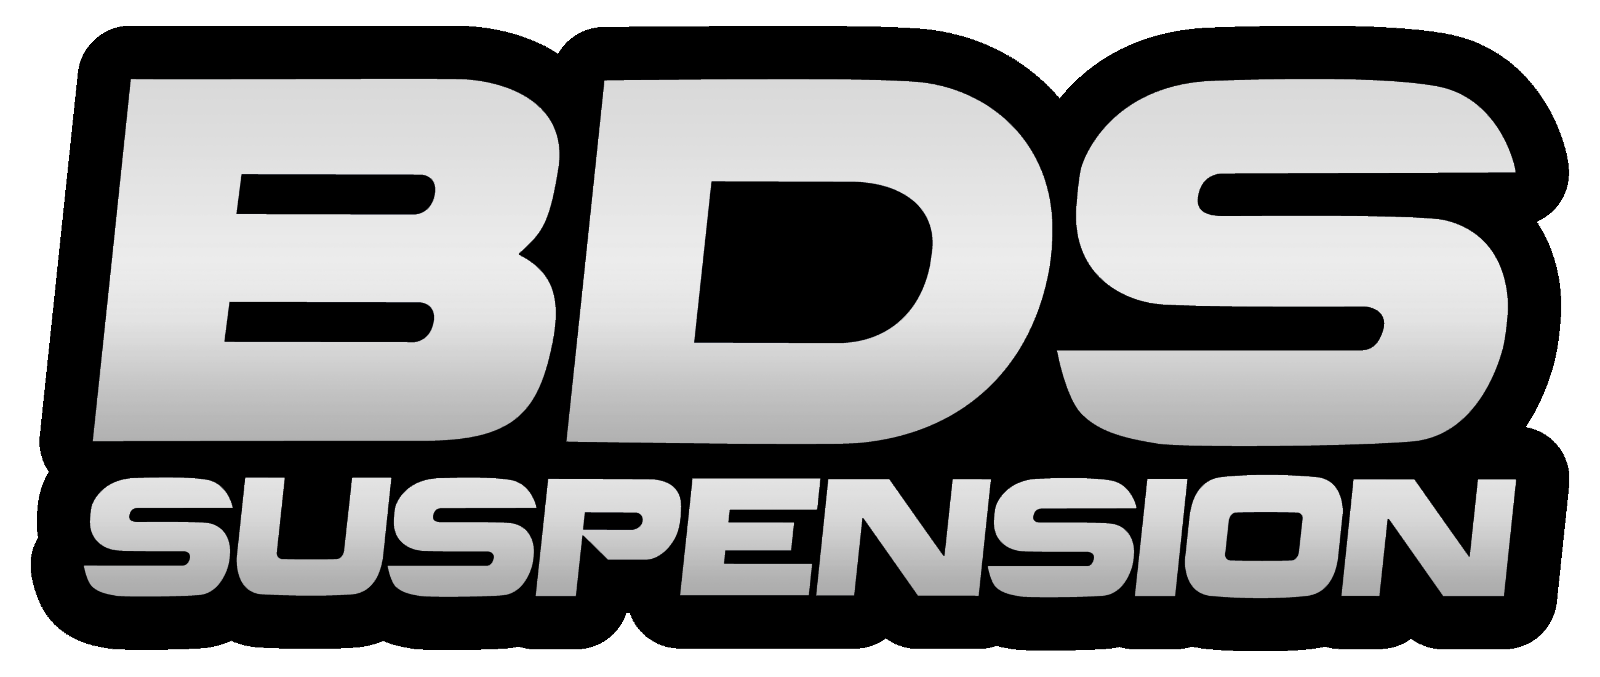 BDS BDS1801FS 6 Inch Lift Kit Chevy Silverado or GMC Sierra 1500 (19-24) 4WD Gas